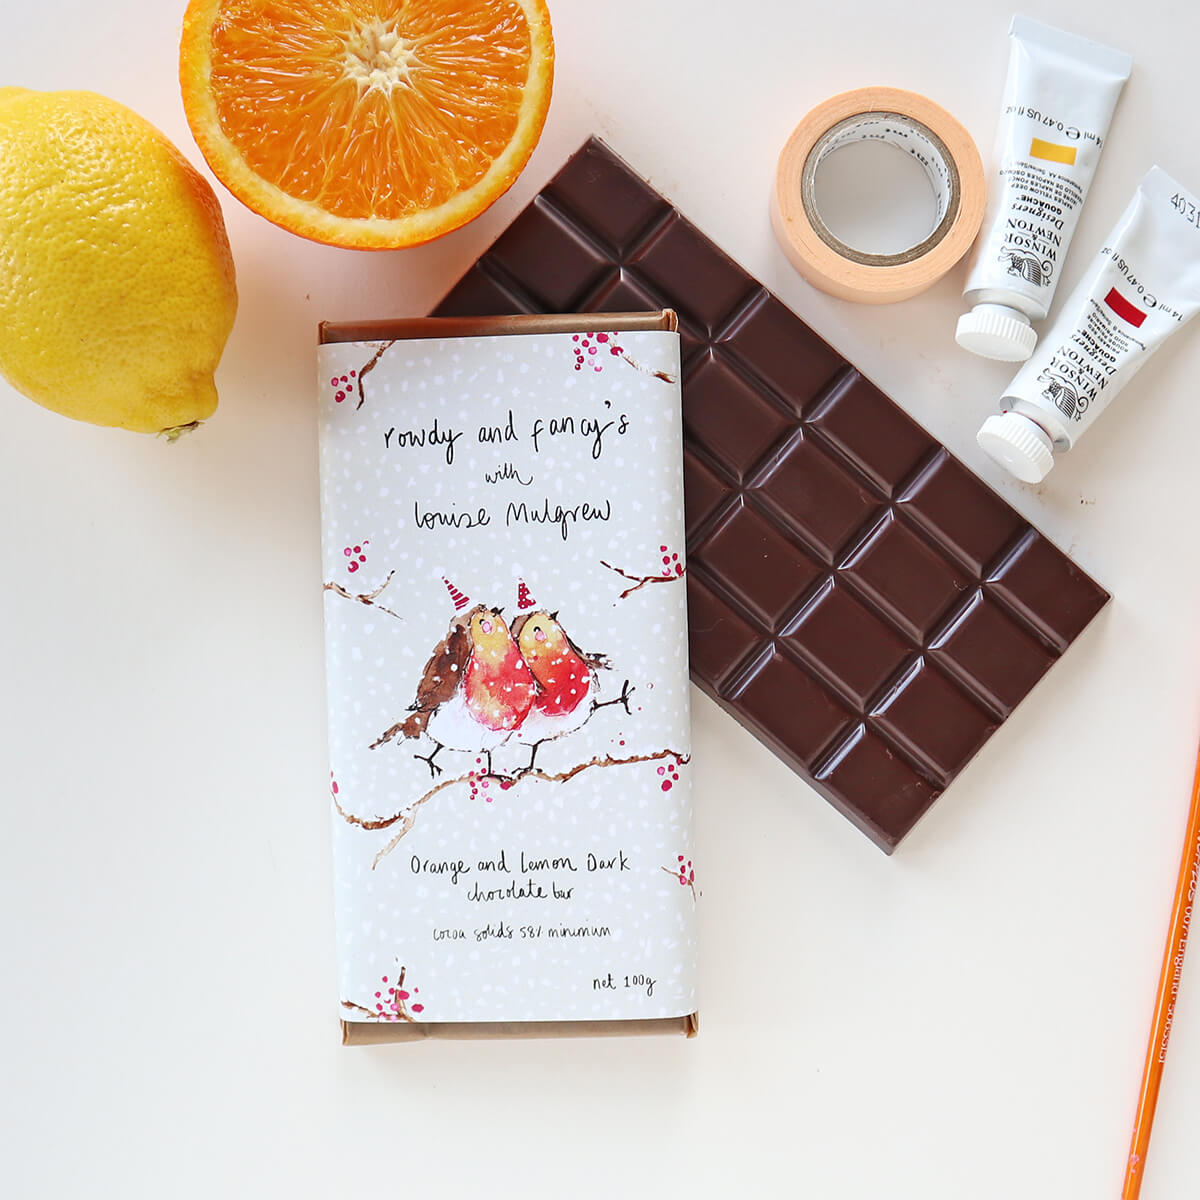 Rowdy & Fancy's - Oranges and Lemon Dark Chocolate.jpg